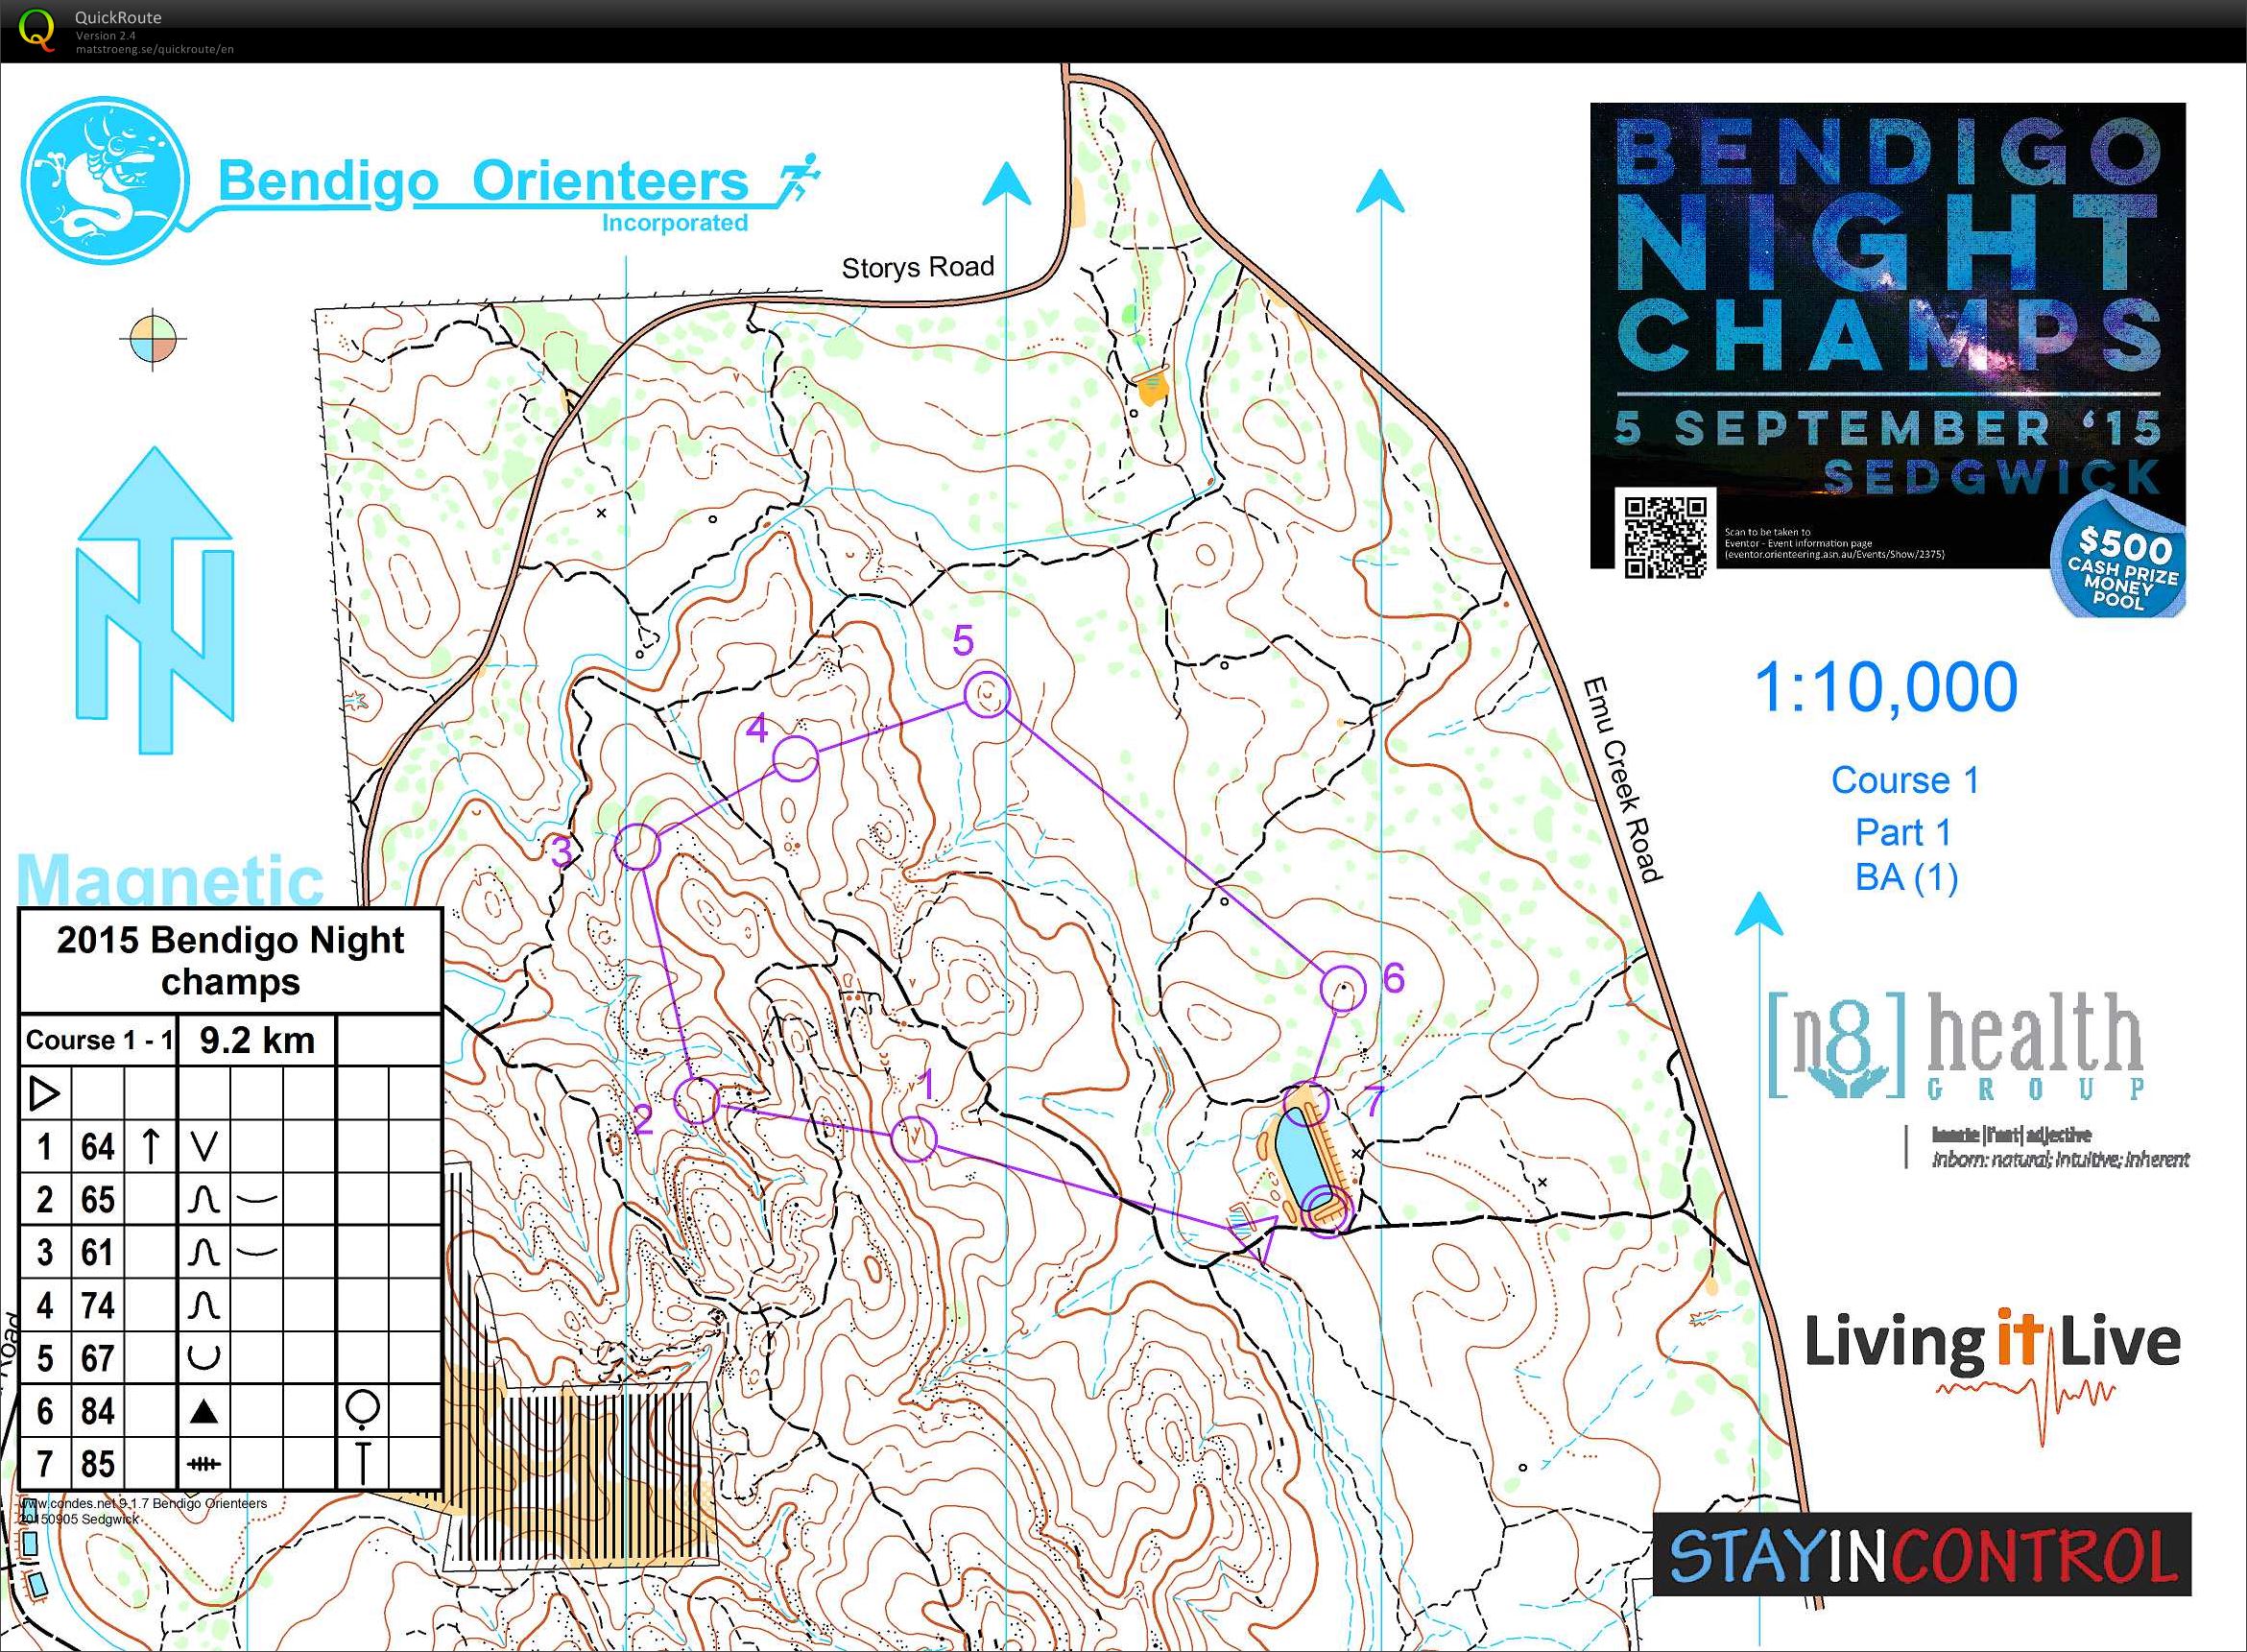 Bendigo Night Champs - Map 1 (05/09/2015)